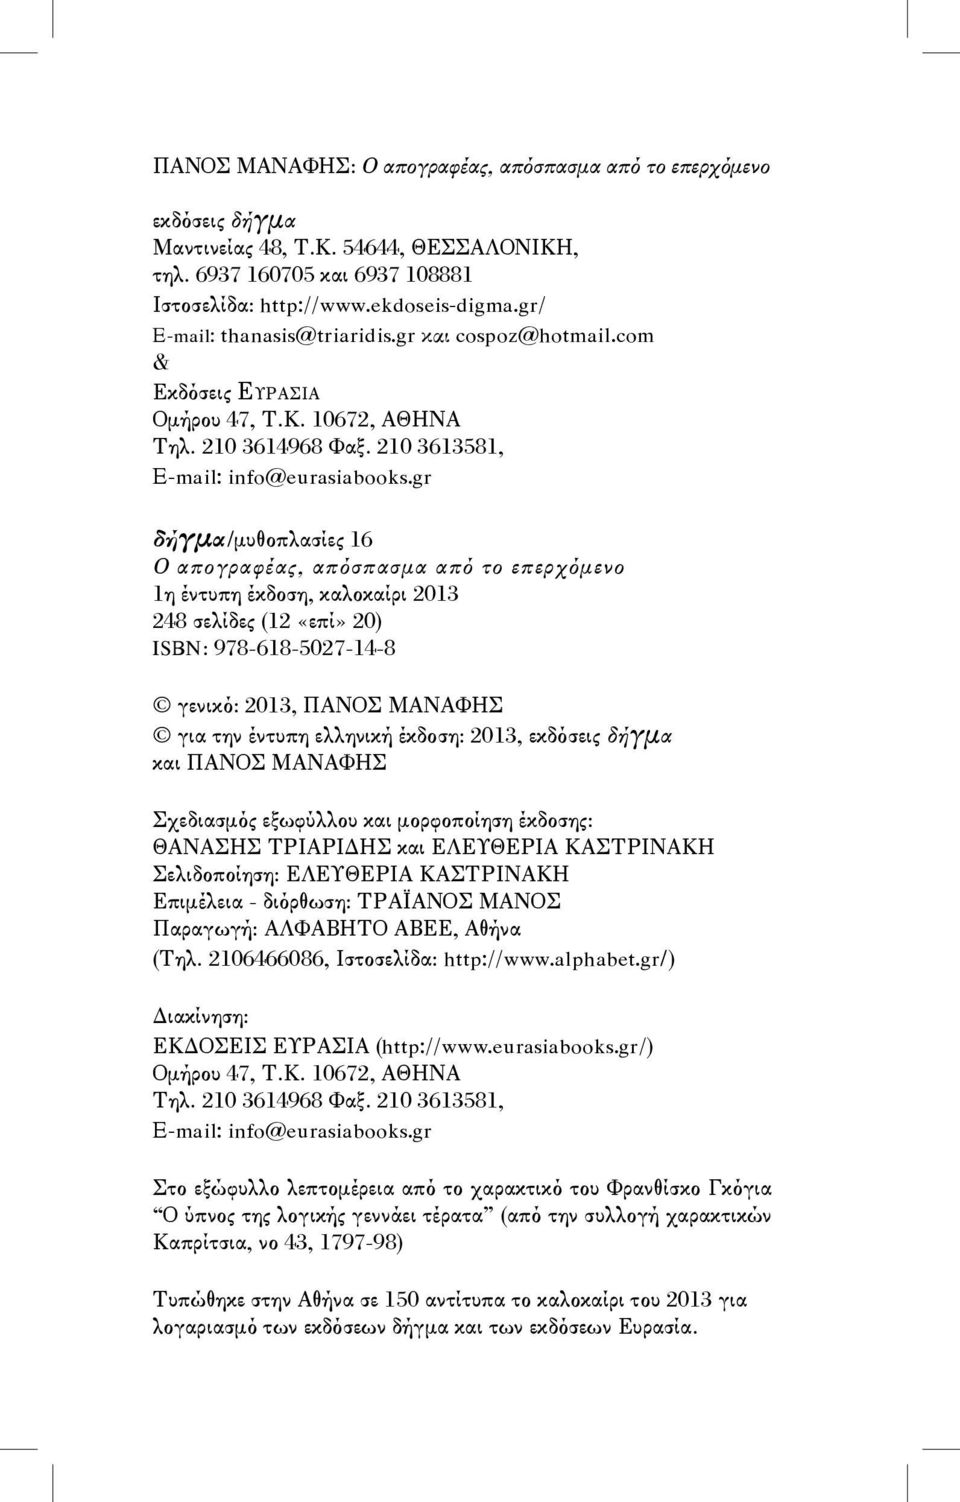 gr δήγμα /μυθοπλασίες 16 Ο απογραφέας, απόσπασμα από το επερχόμενο 1η έντυπη έκδοση, καλοκαίρι 2013 248 σελίδες (12 «επί» 20) ISBN: 978-618-5027-14-8 γενικό: 2013, ΠΑΝΟΣ ΜΑΝΑΦΗΣ για την έντυπη